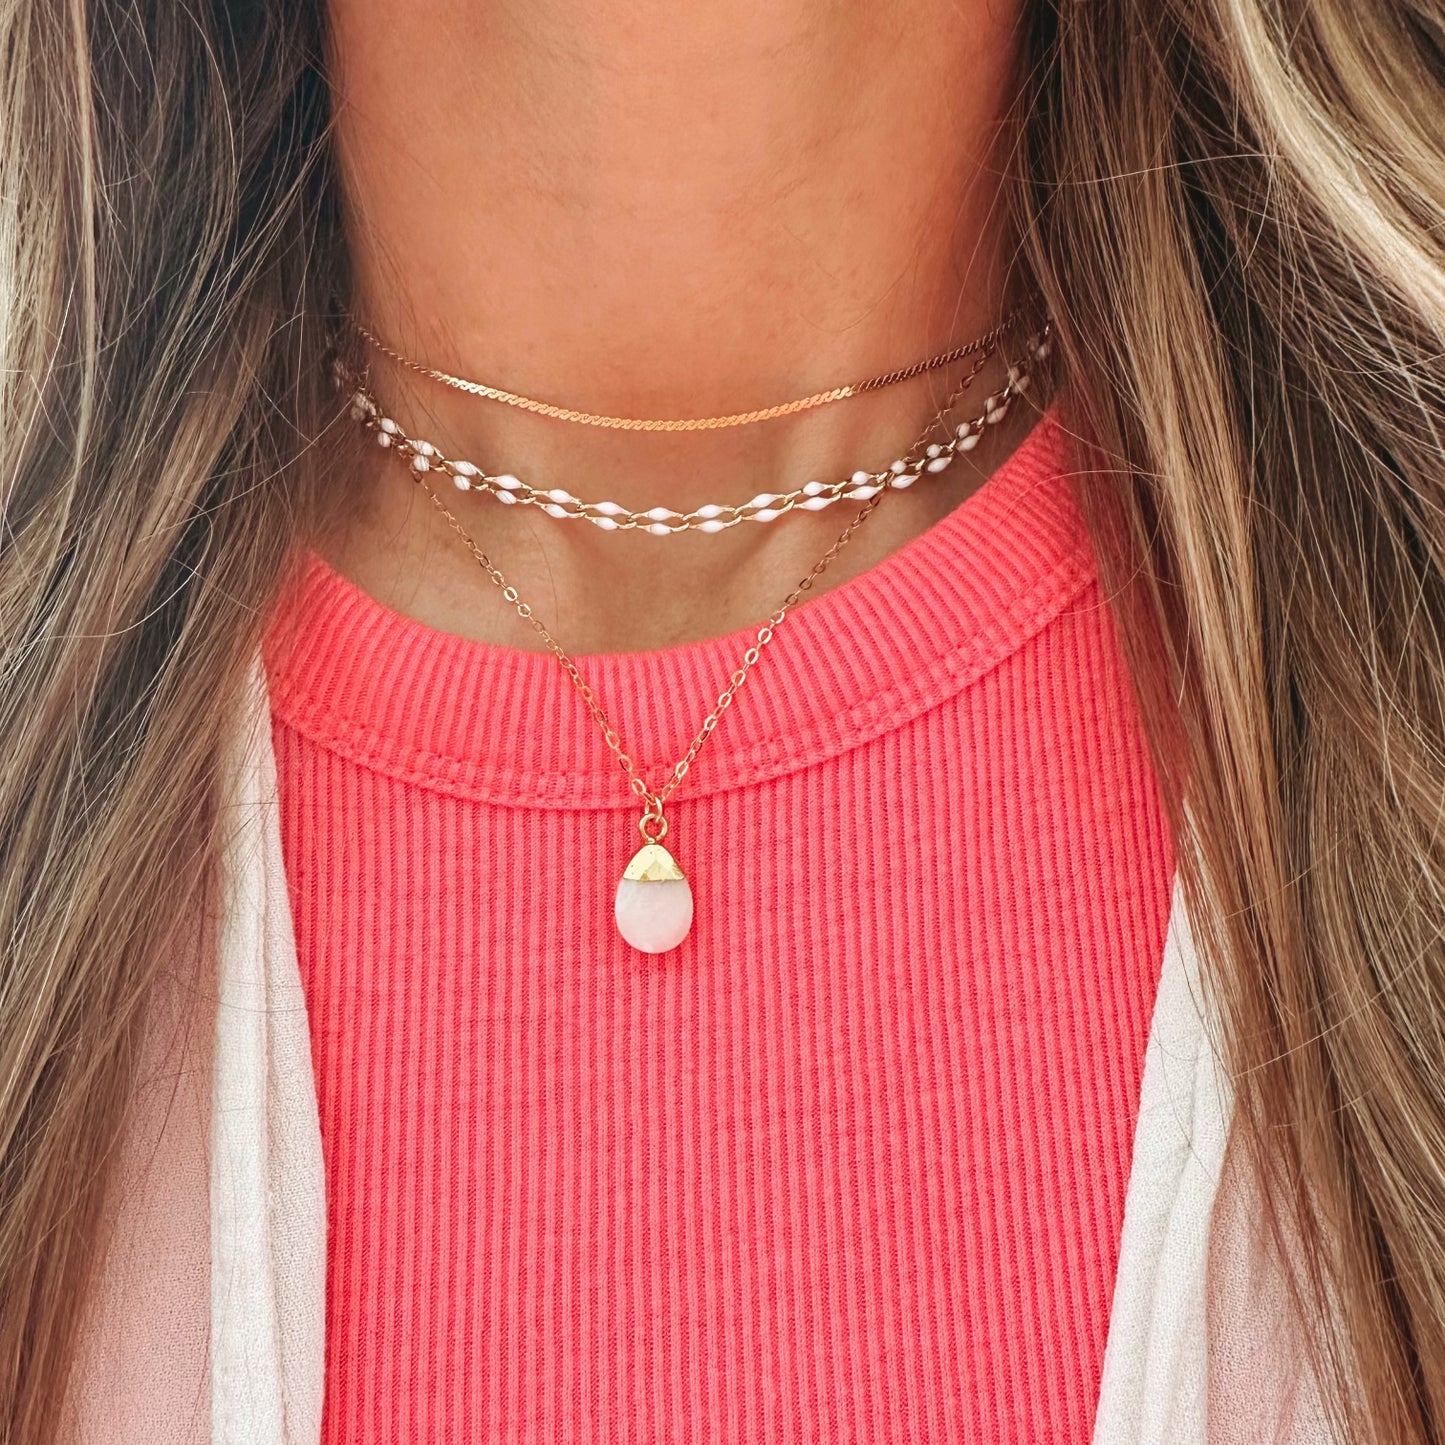 Maui white necklace